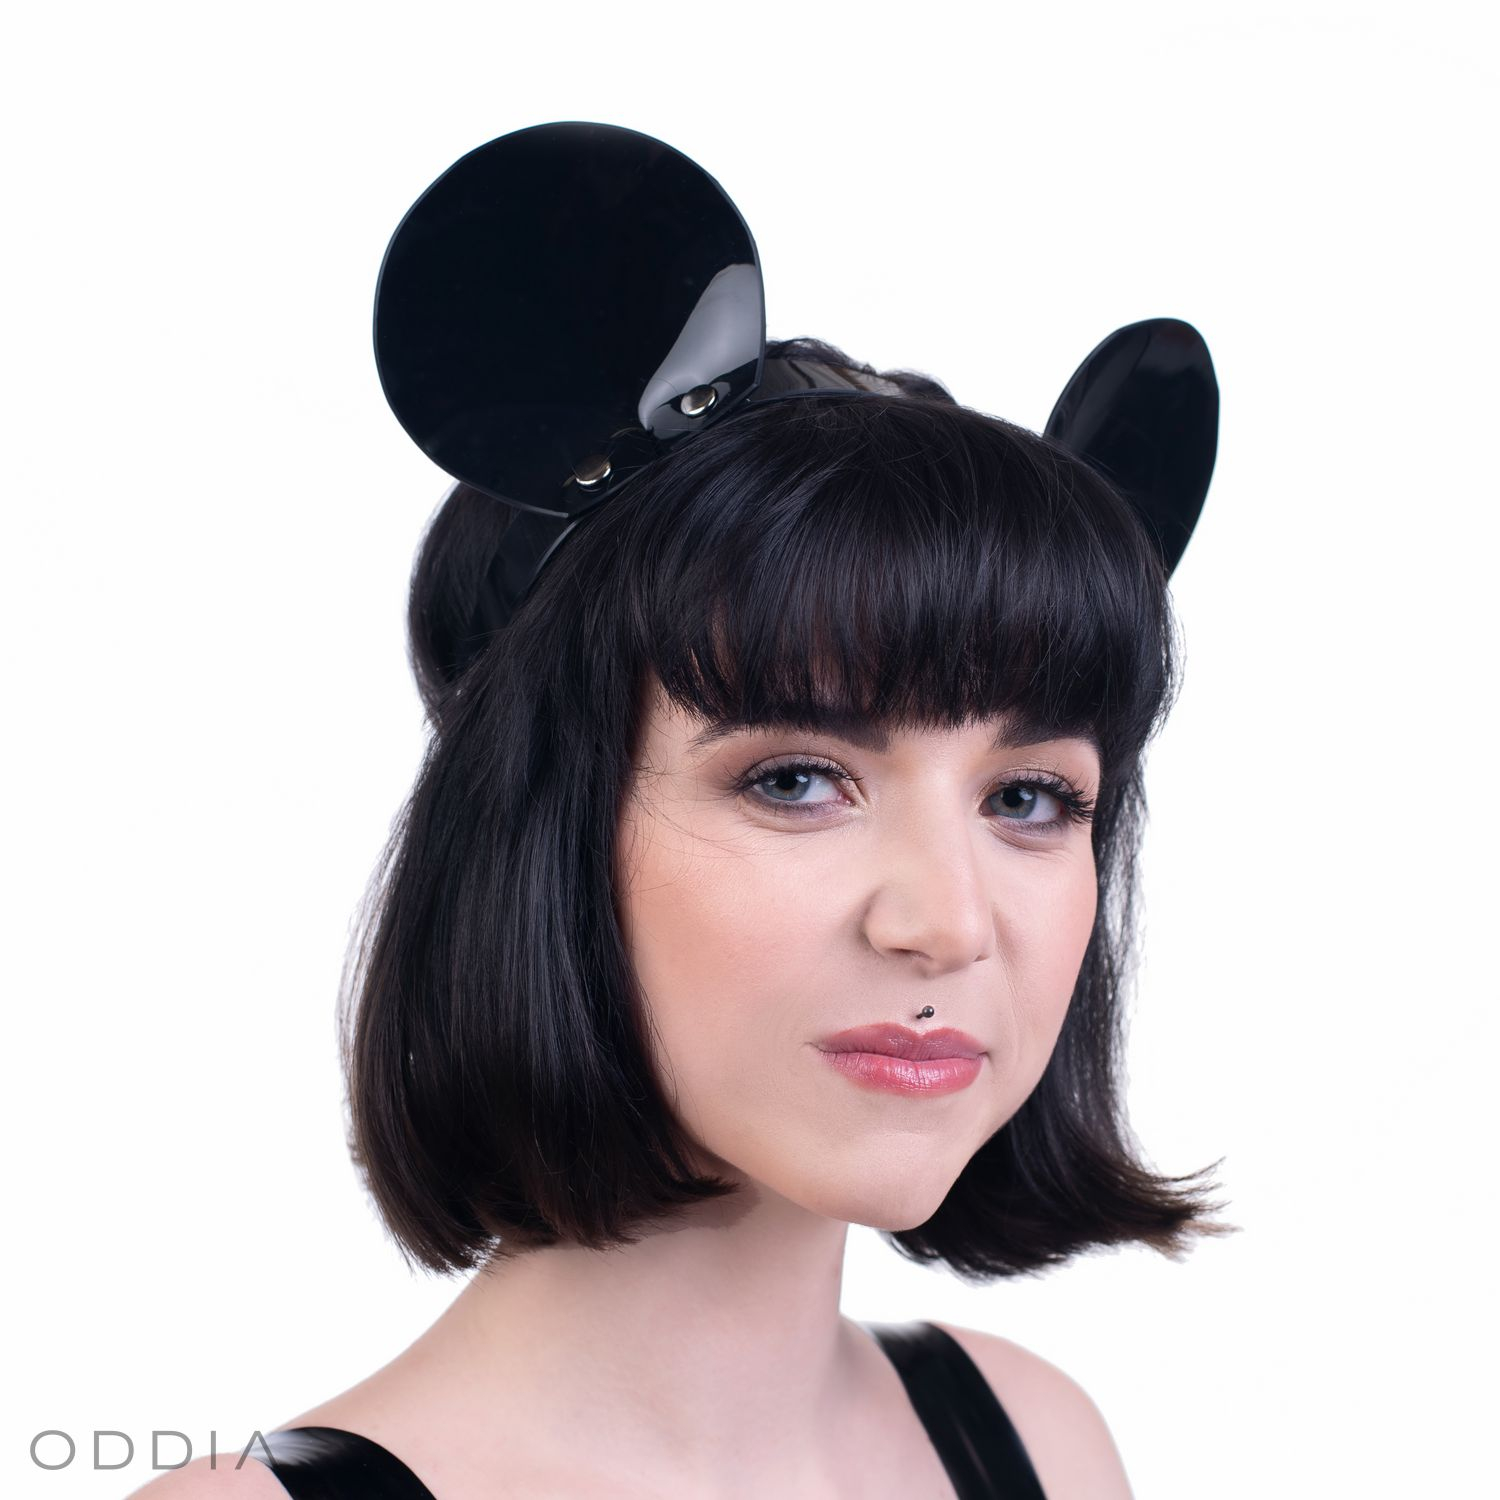 Oddia®  Headband with mouse ears